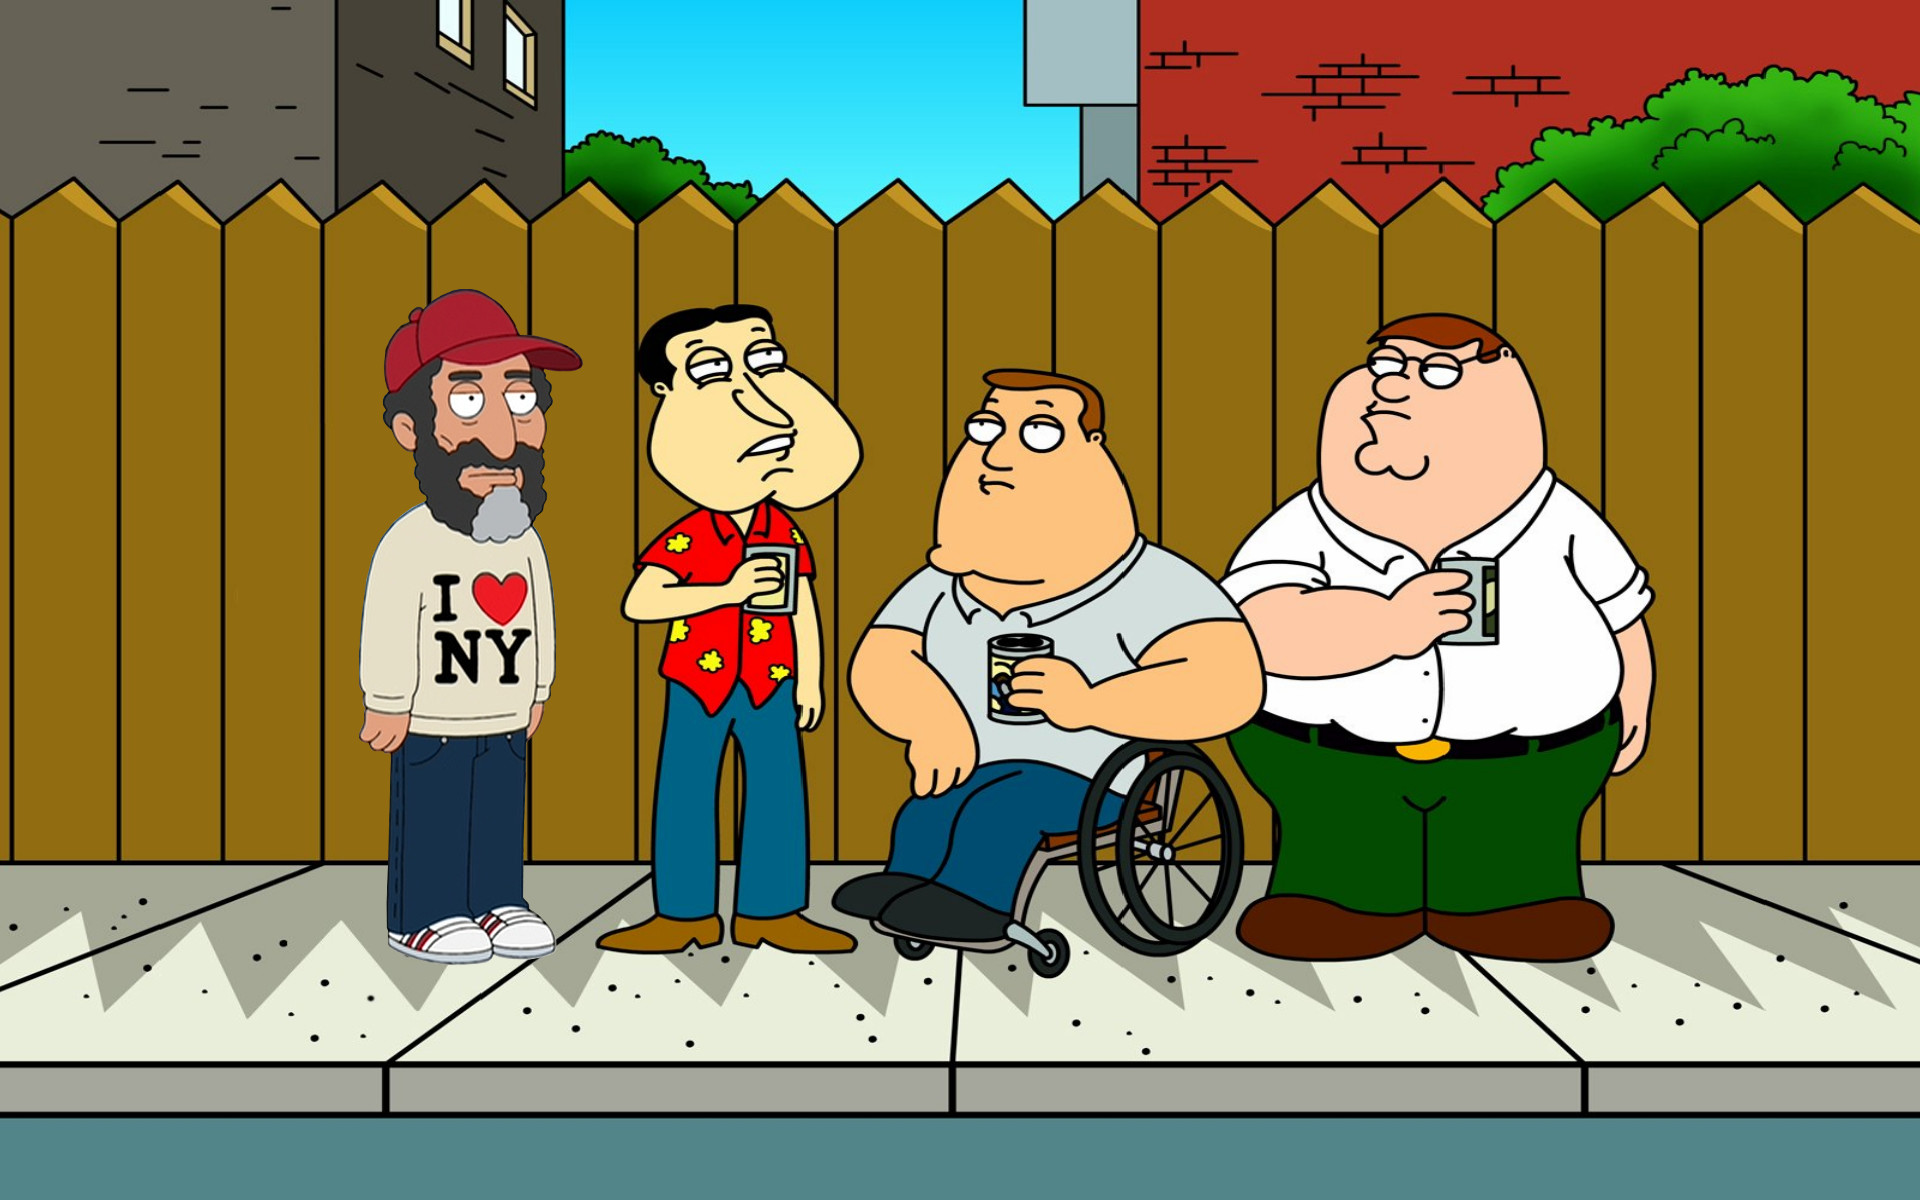 Family Guy Background